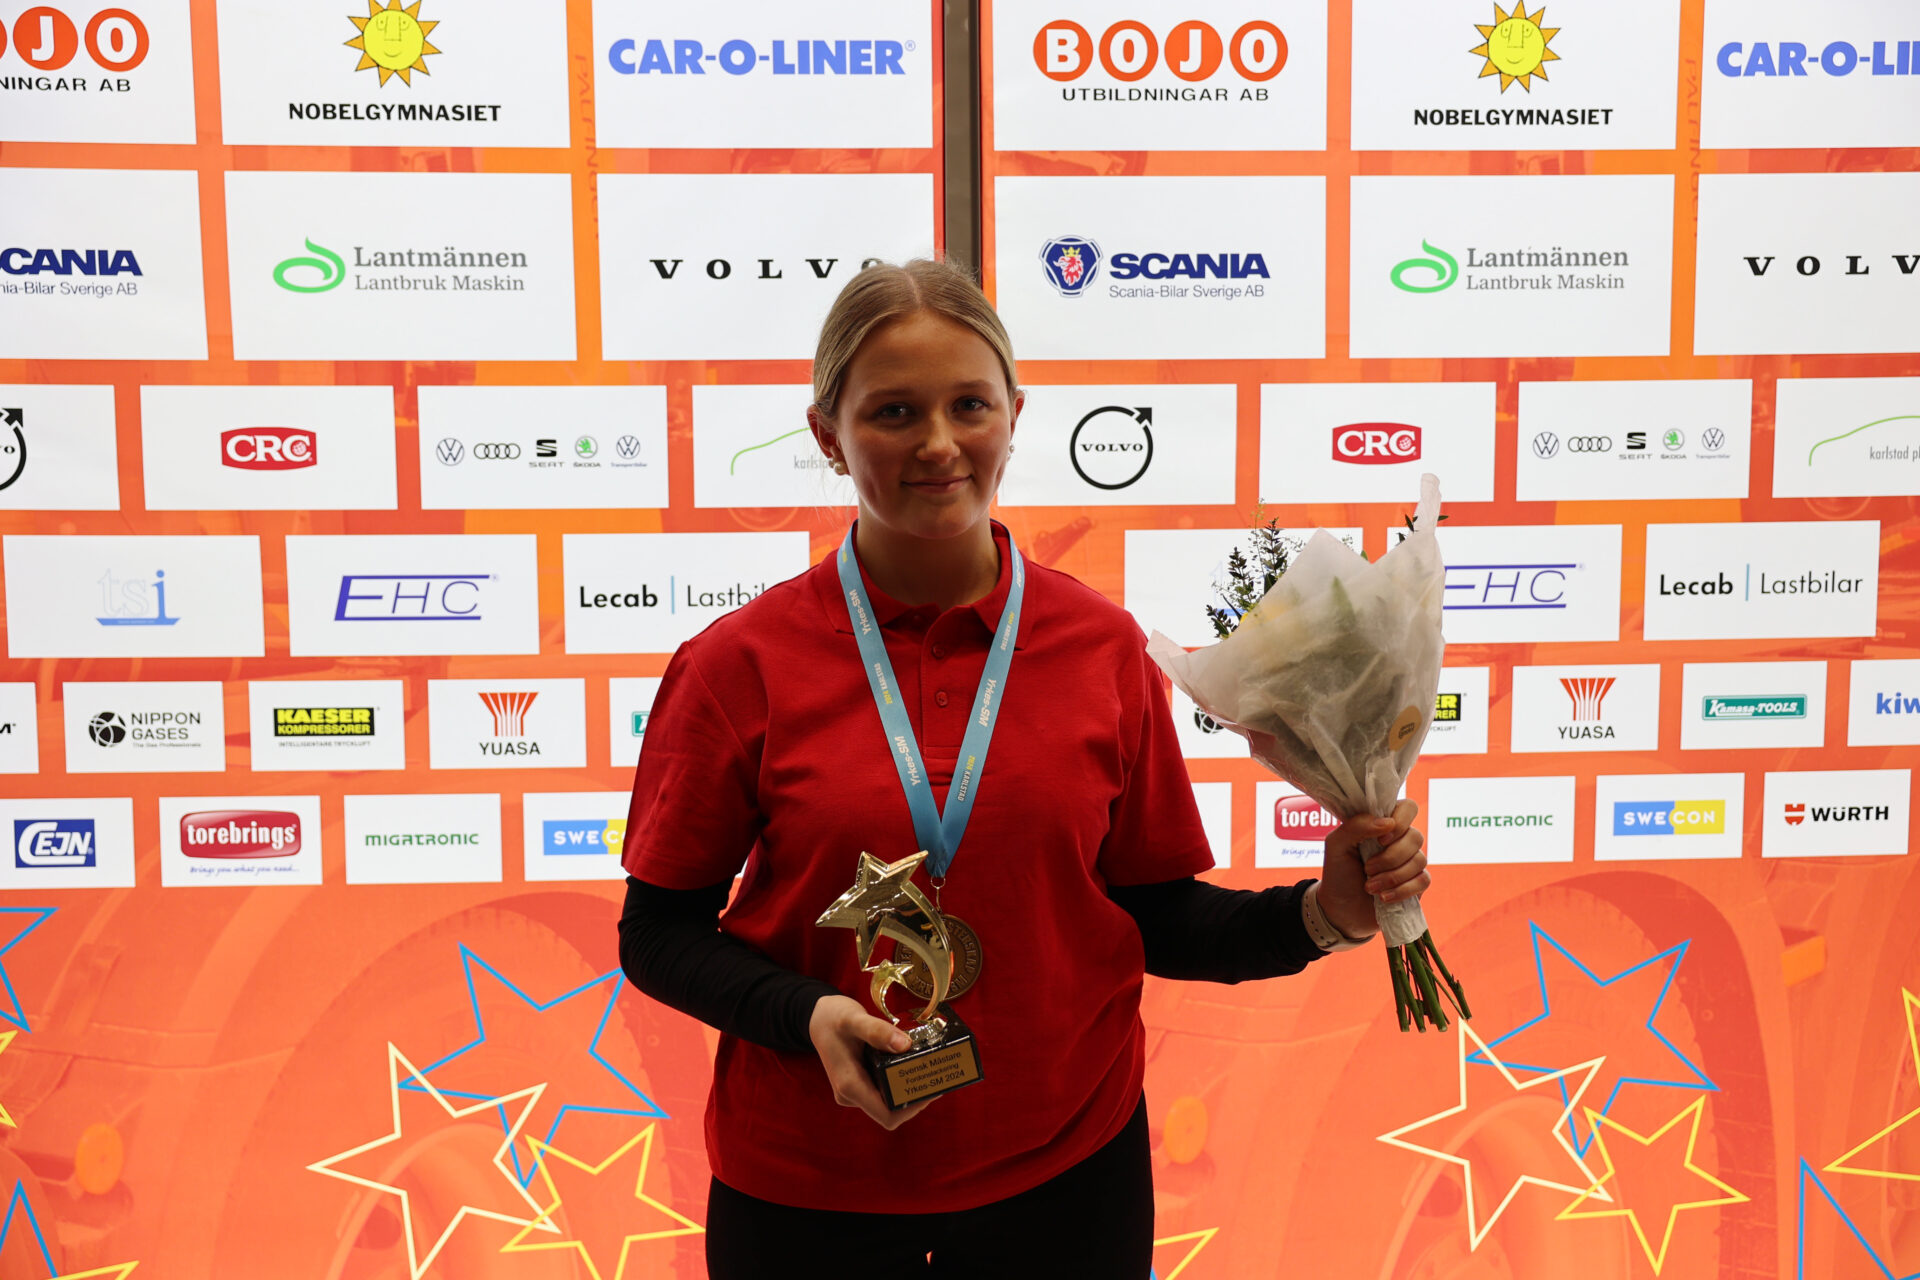    Frida Karlsson, Bruzaholm, Atteviks Bil AB, vann kategorin Fordonslackering.  